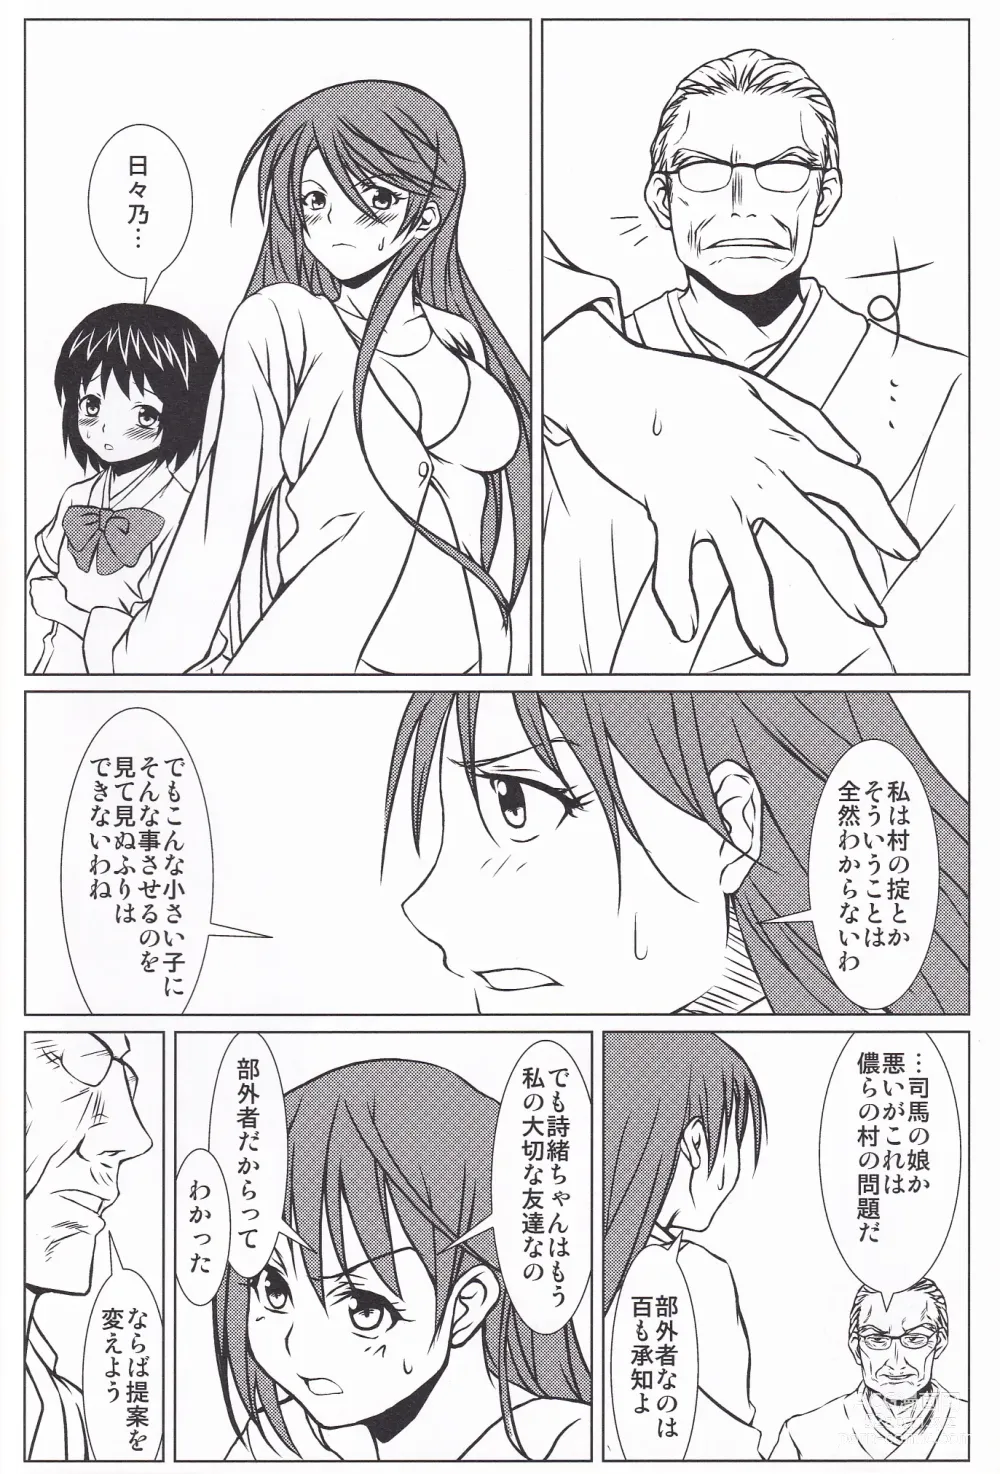 Page 5 of doujinshi Hibi no Uta